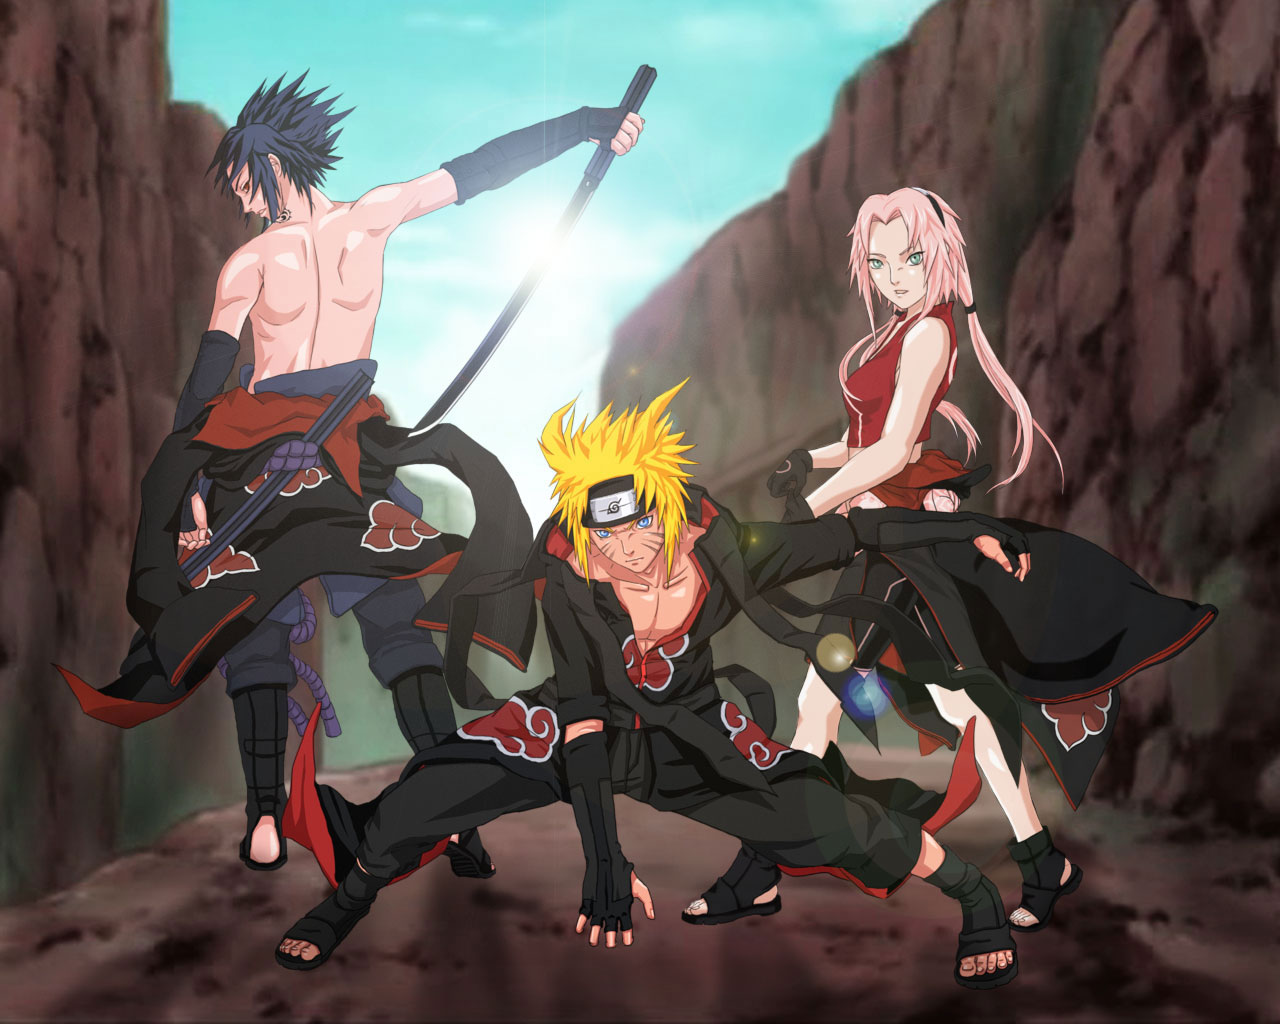 Quand sort la suite de Naruto ?